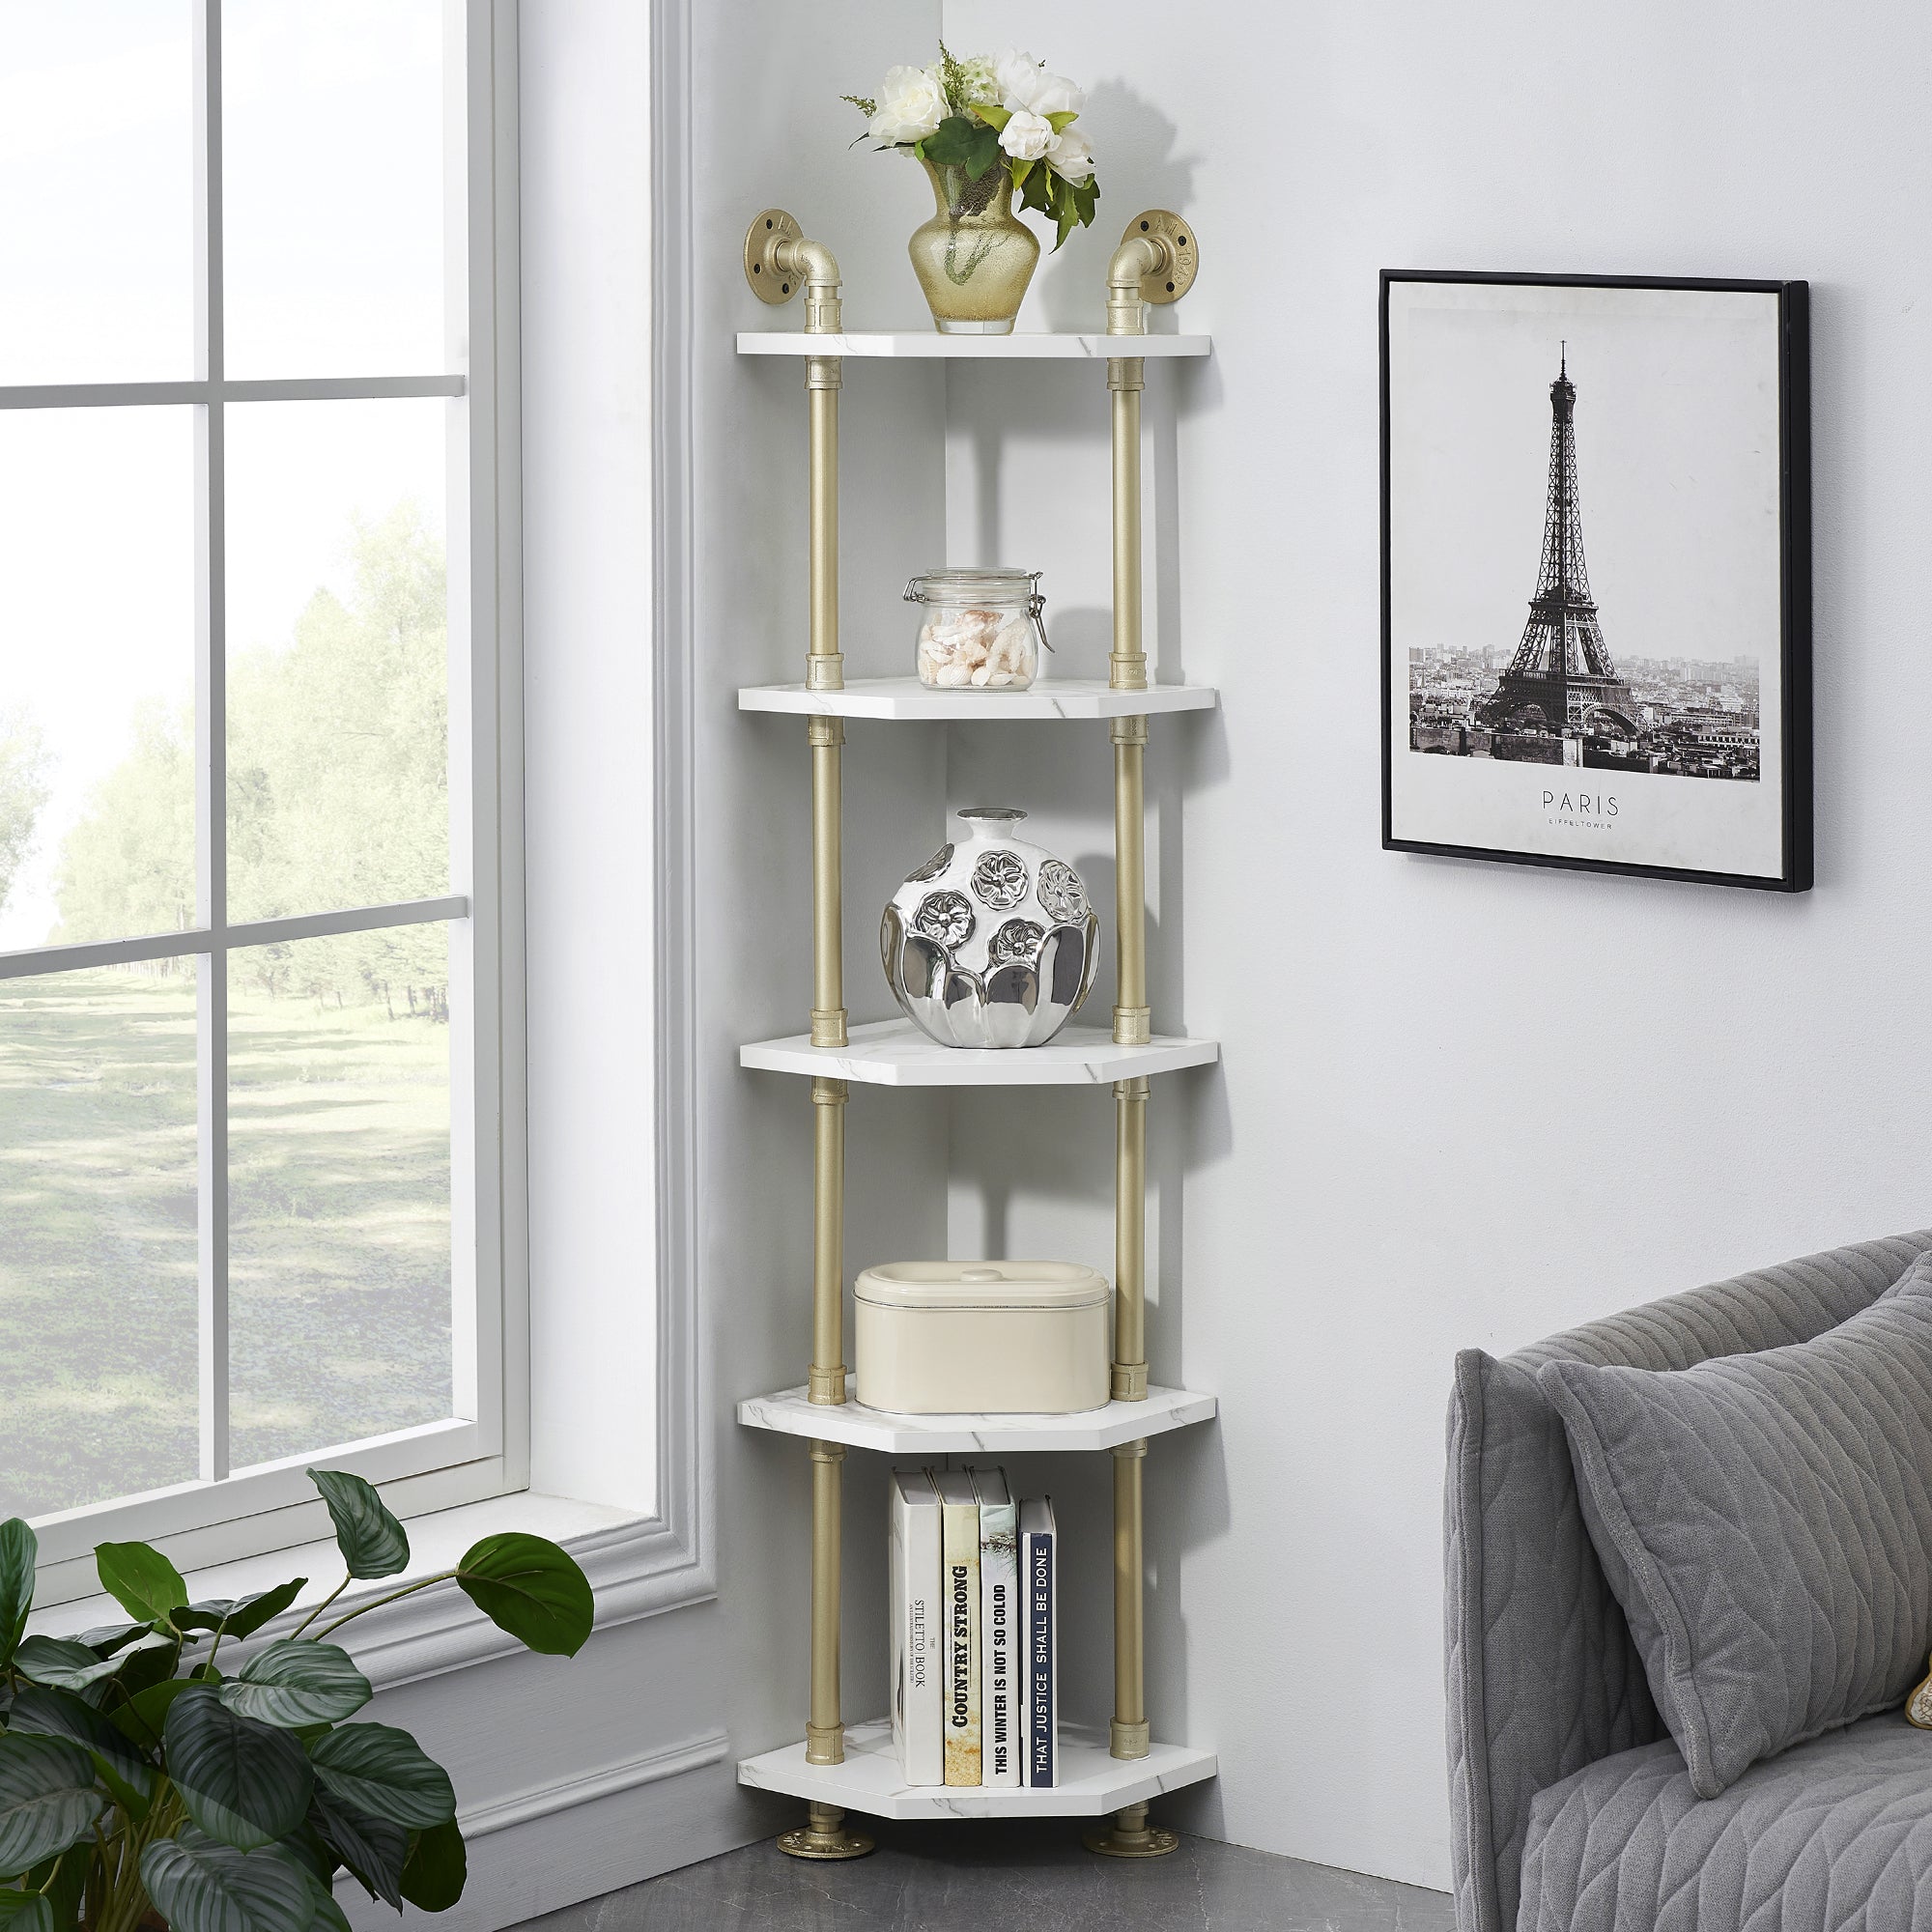 Ivinta Corner Bookshelf with Storage, Wall Mount Pipe Open Shelves, White